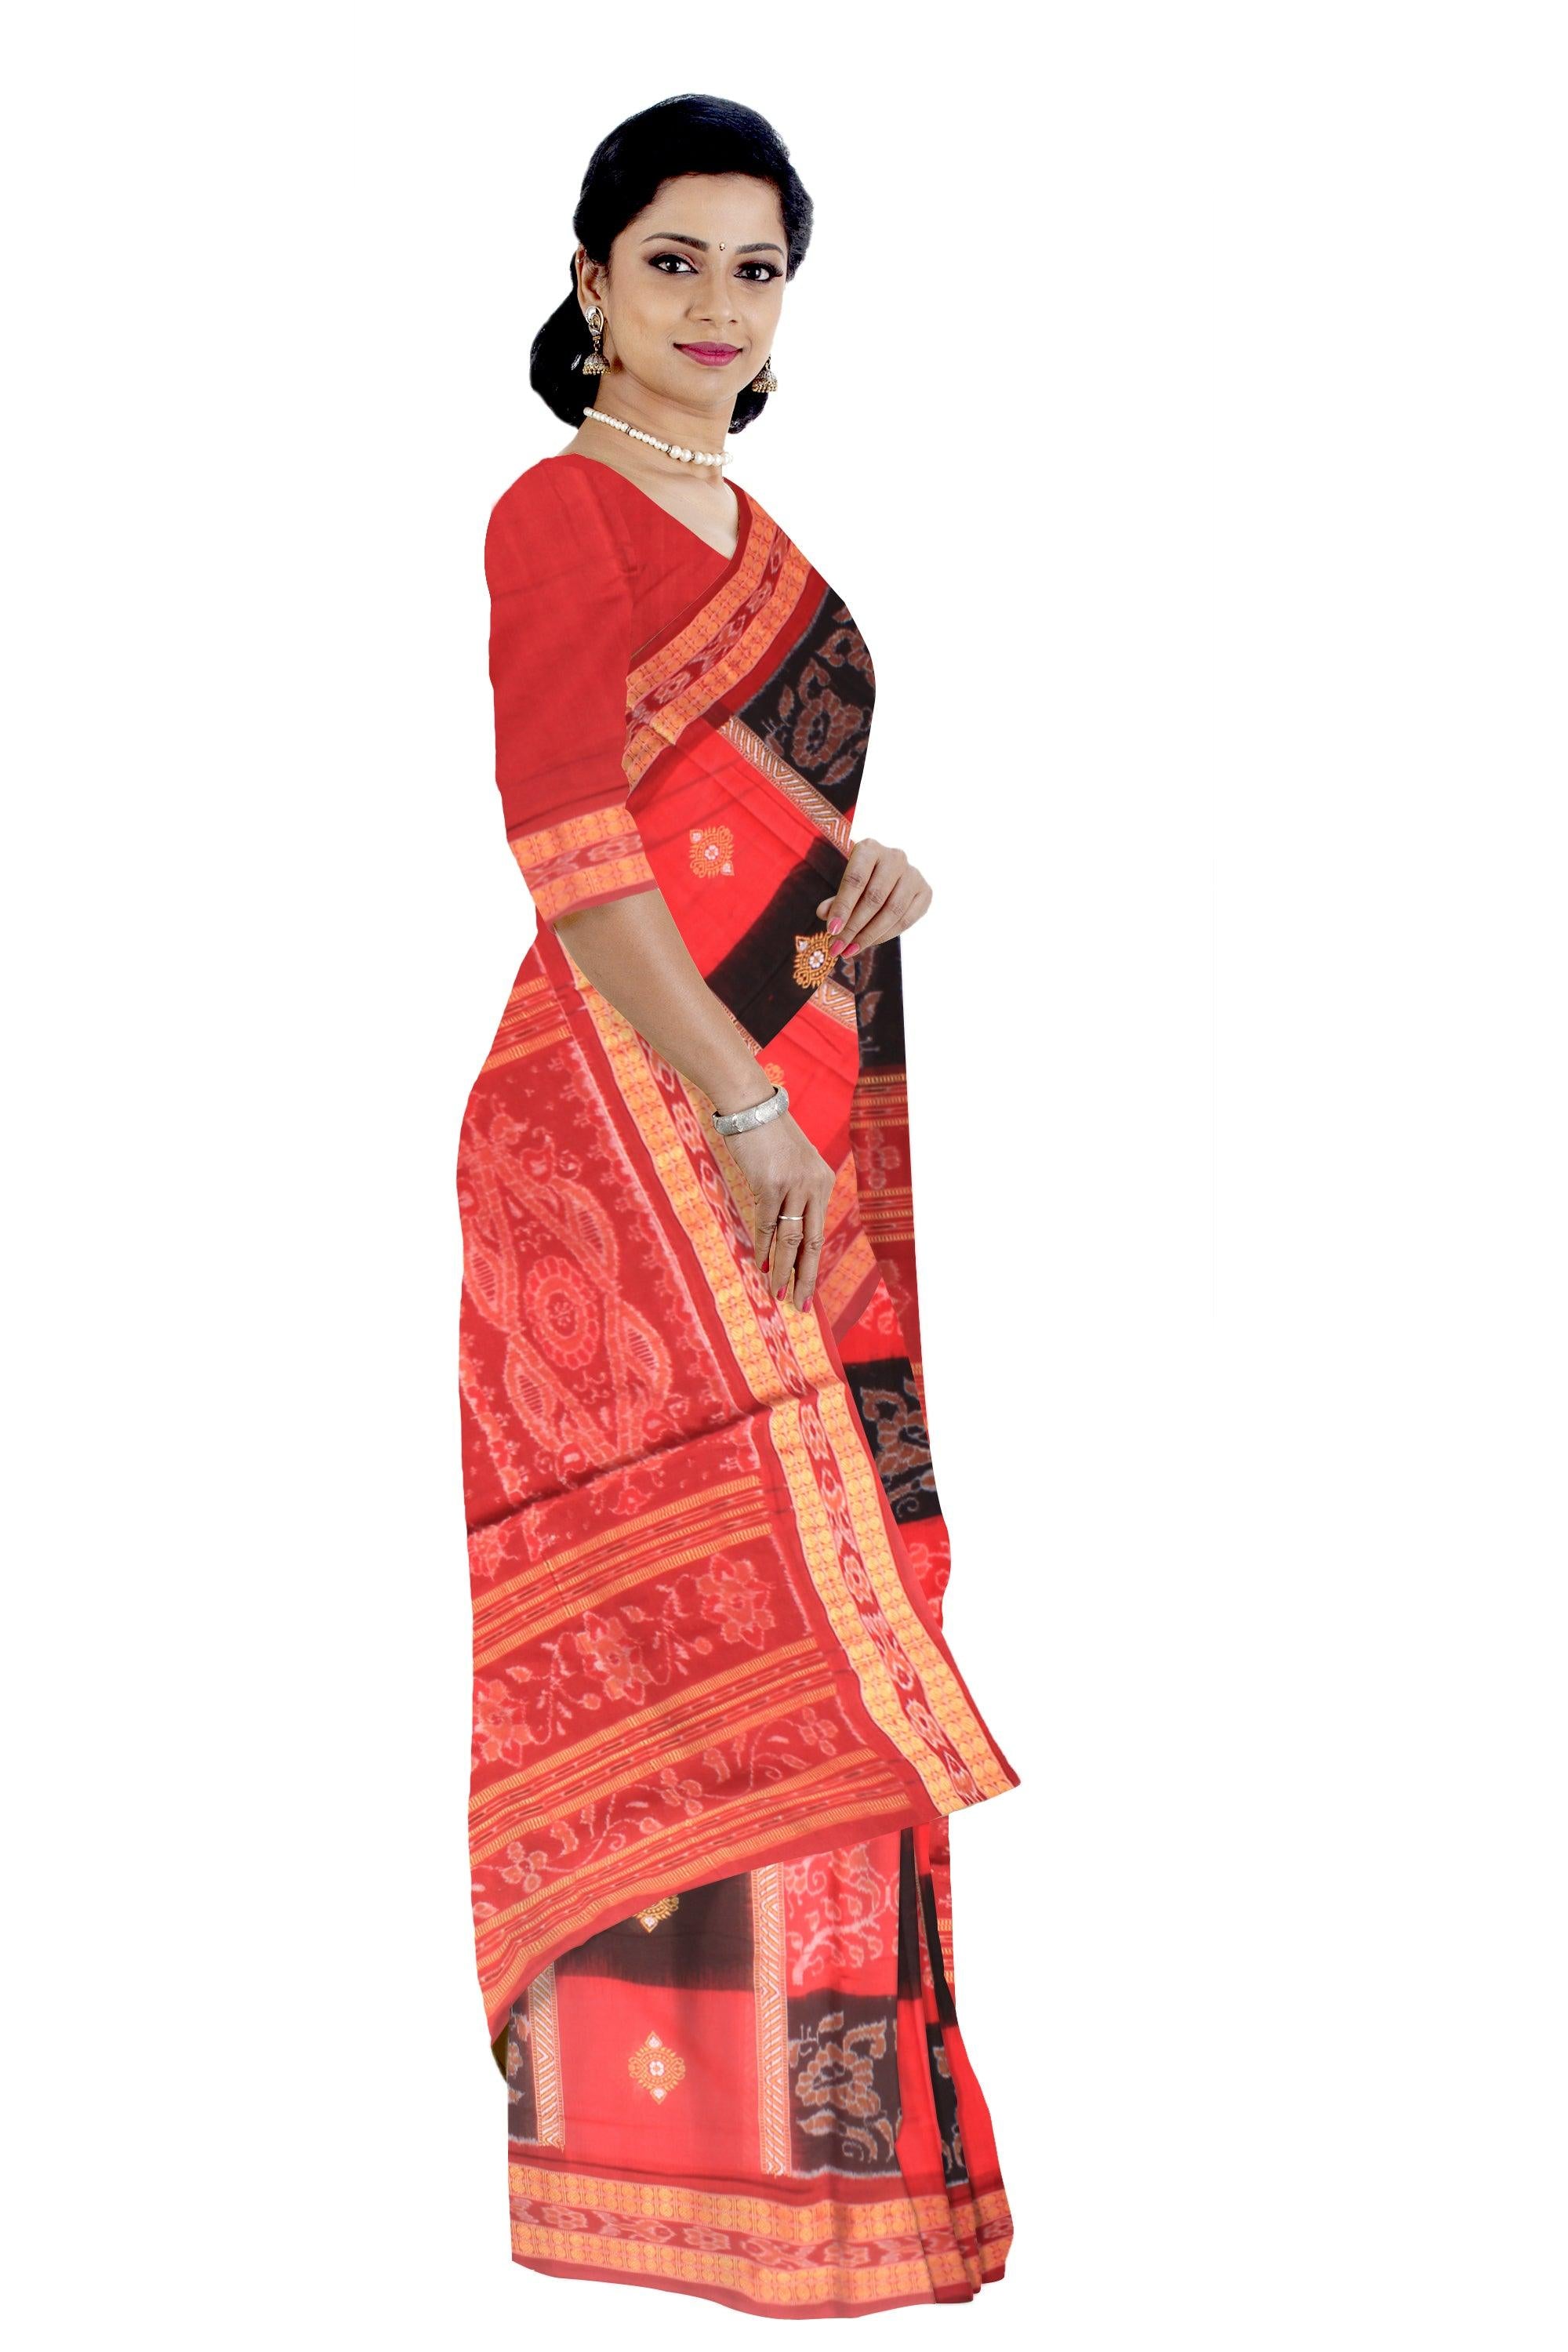 Sambalpuri Flowers pattern cotton saree in Red and Black color with blouse piece. - Koshali Arts & Crafts Enterprise